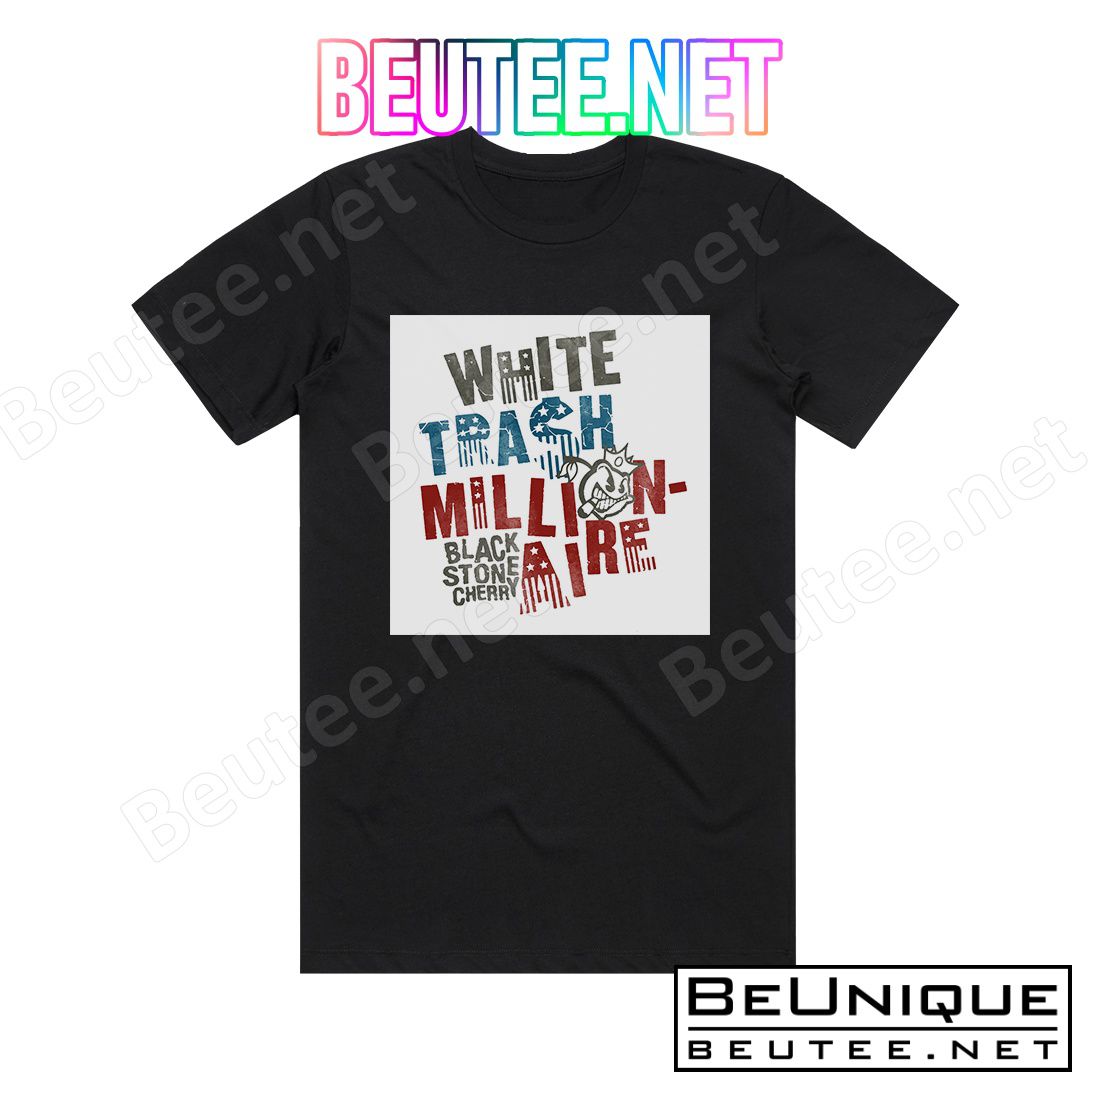 Black Stone Cherry Trash Millionaire 1 Album Cover T-Shirt